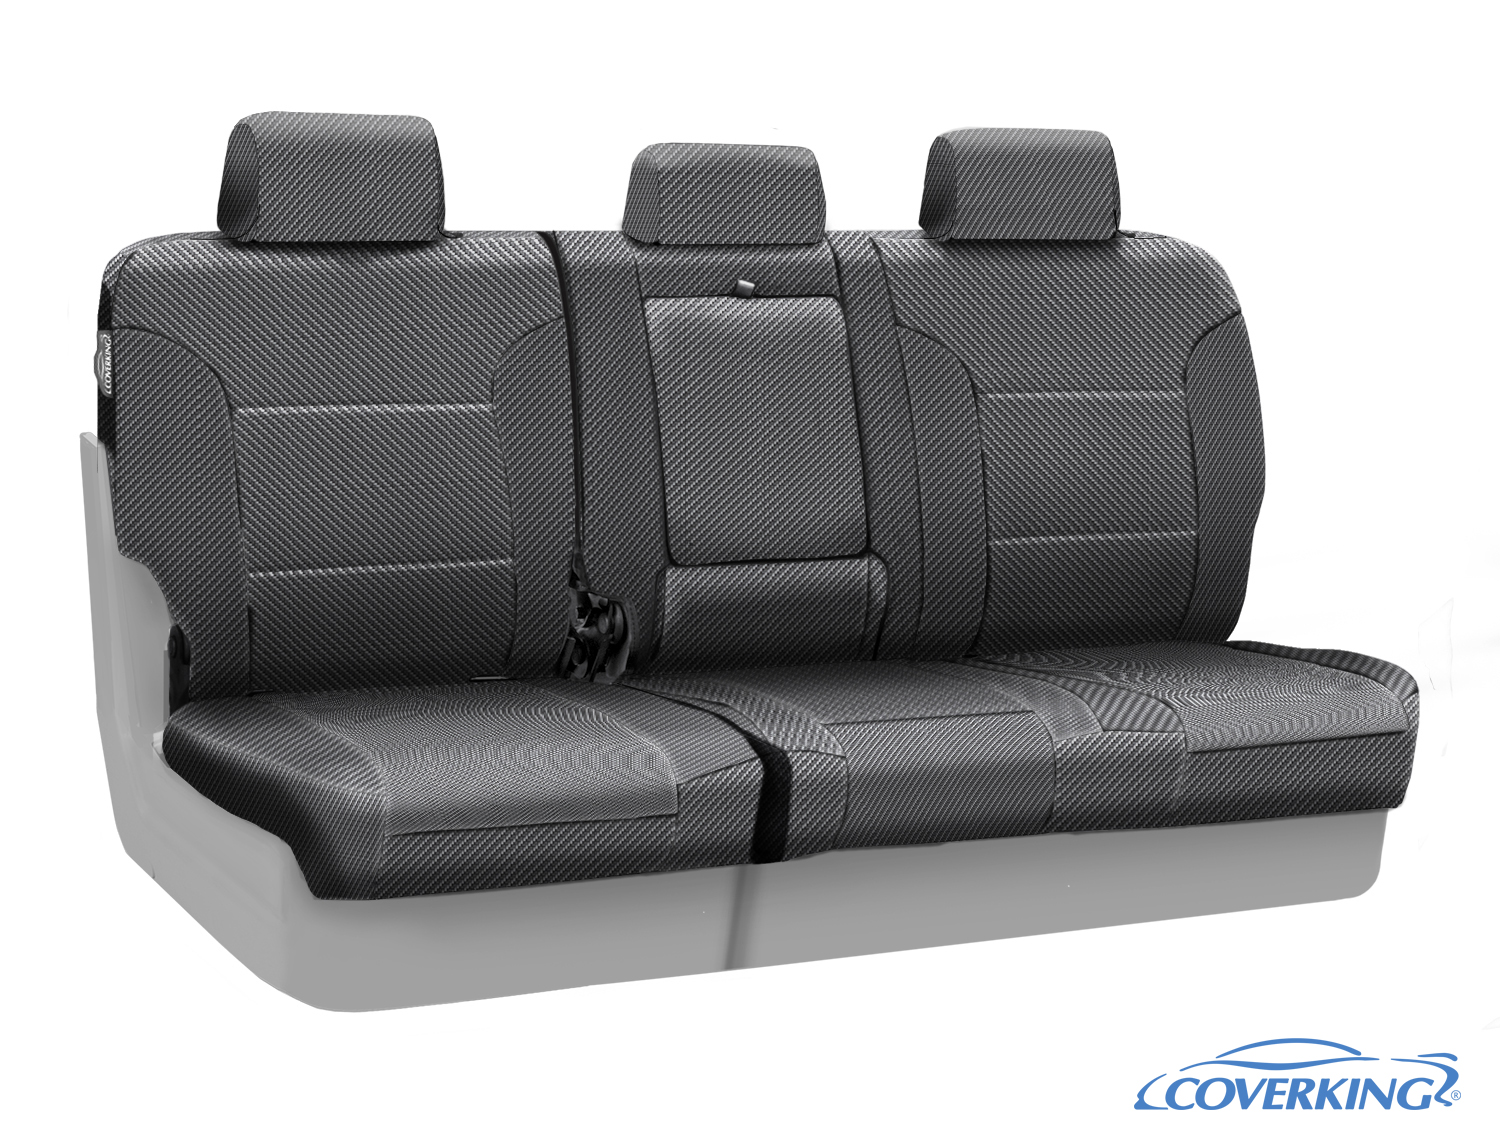 Coverking Neosupreme Rear Custom Car Seat Cover For GMC 2008-2010 ...